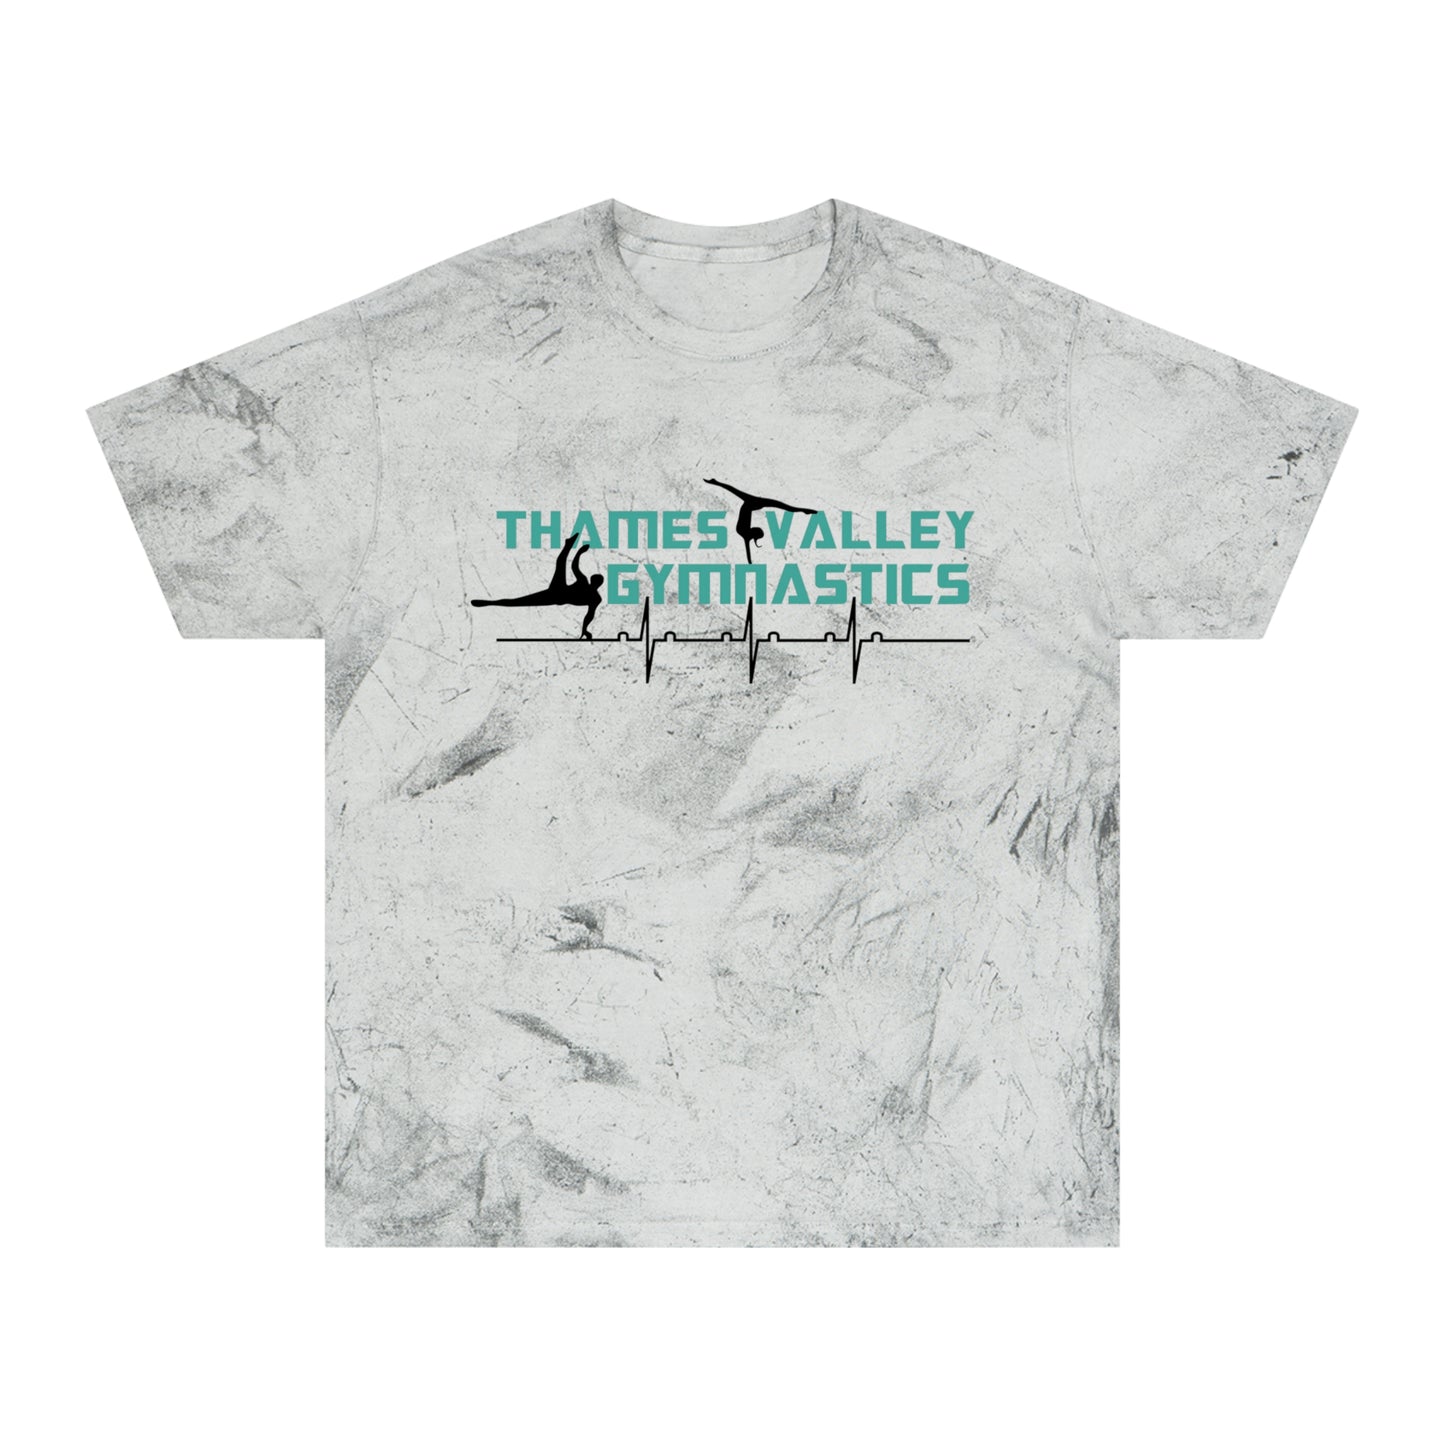 Thames Valley Unisex Color Blast T-Shirt